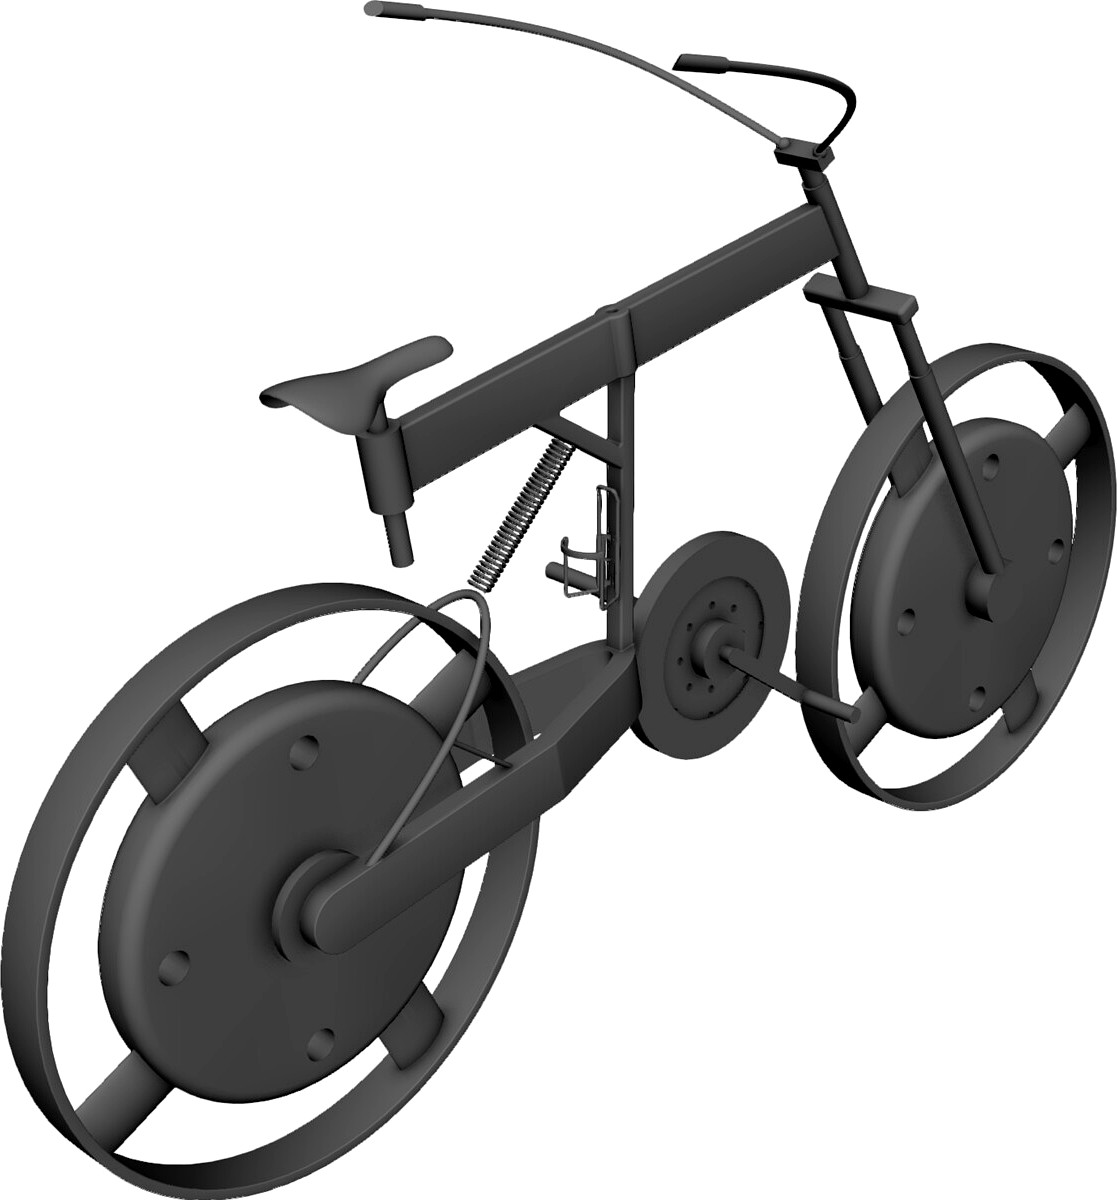 Bicycle Concept 3D CAD Model